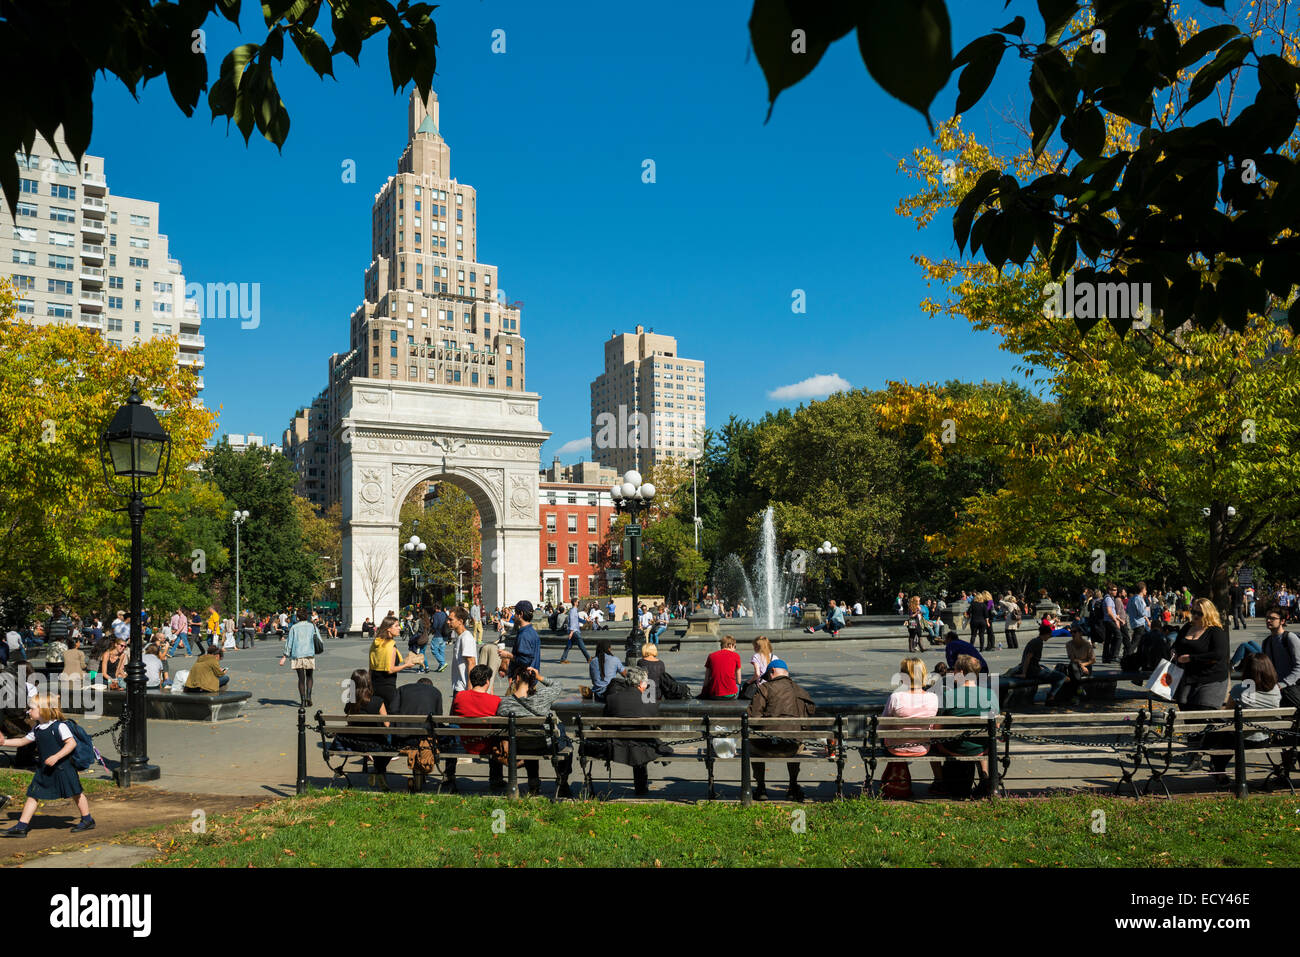 Washington Square Park, Manhattan, New York, United States Banque D'Images